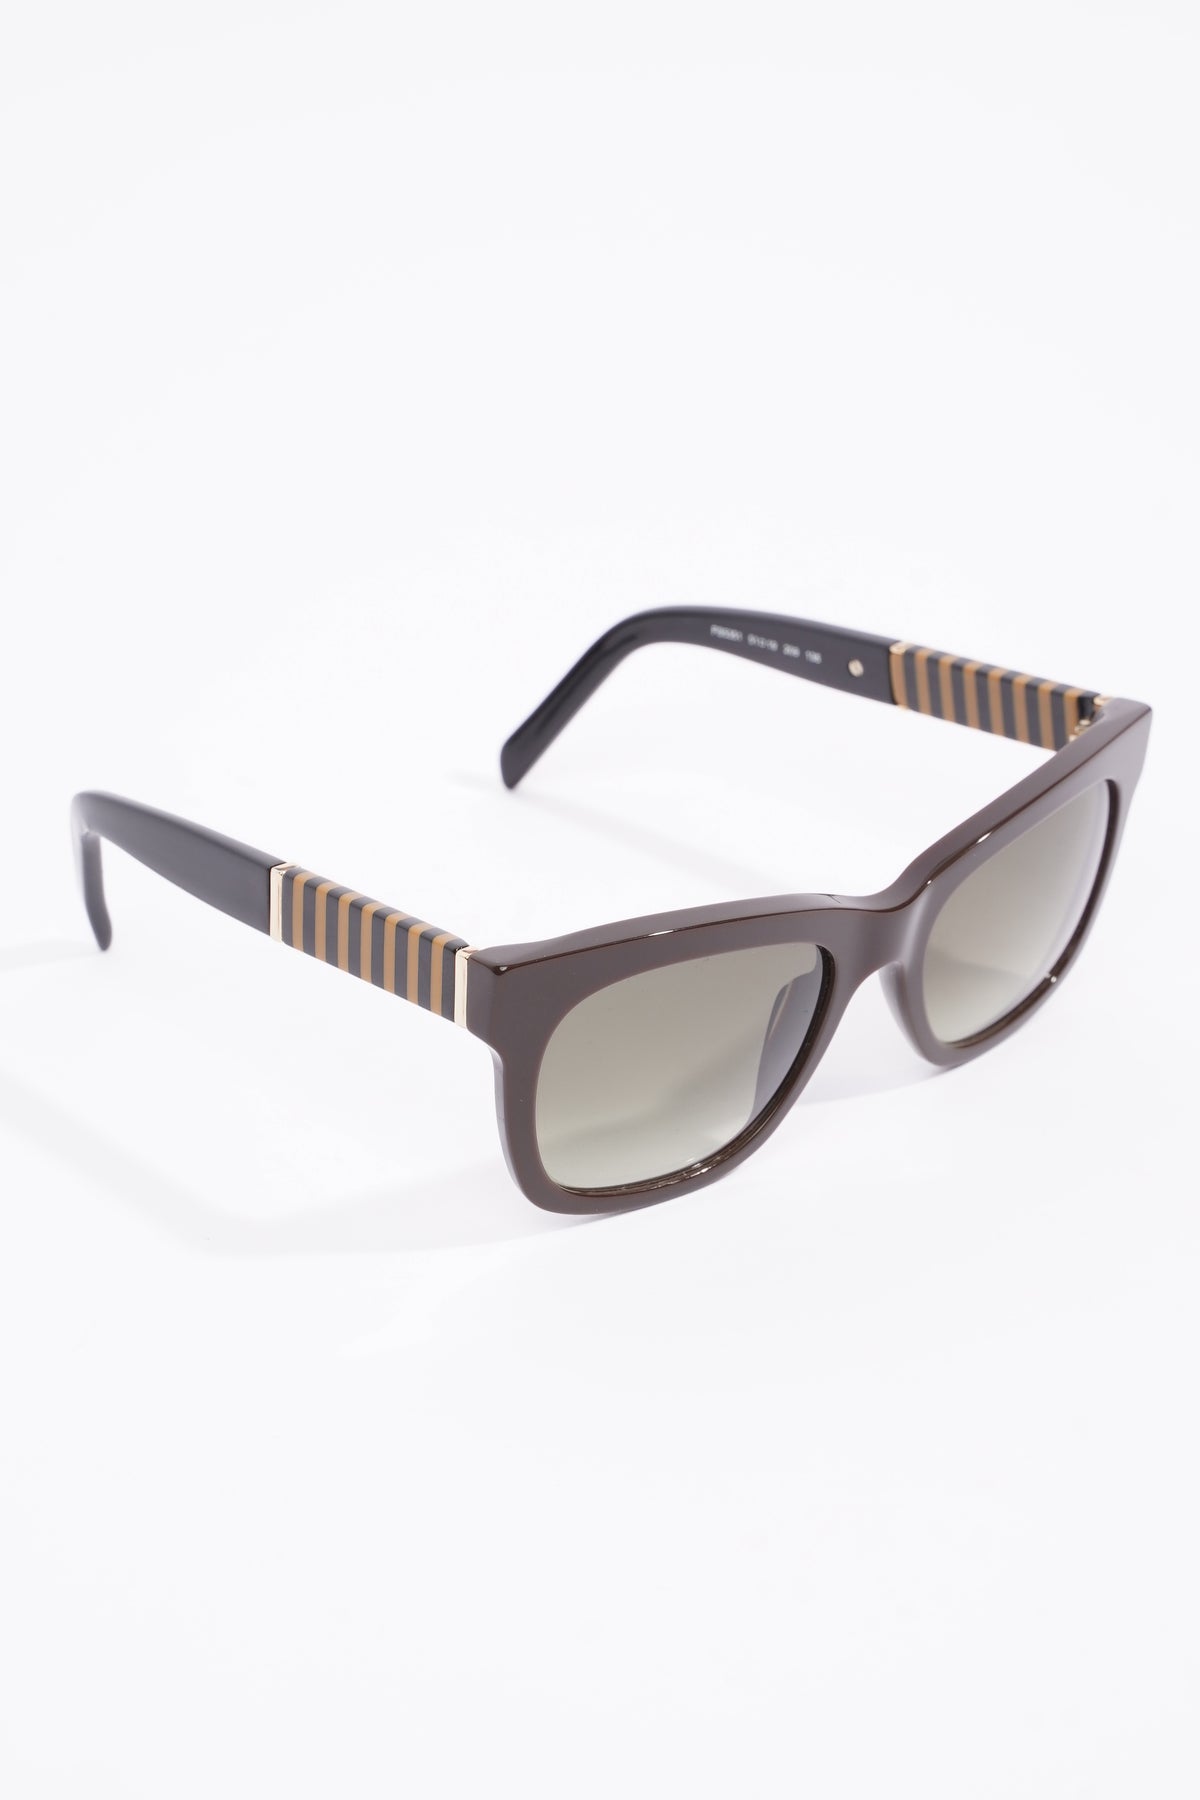 Fendi FENDIRAMA Women's Black Frame Brown Gold Lens Round Sunglasses 53MM